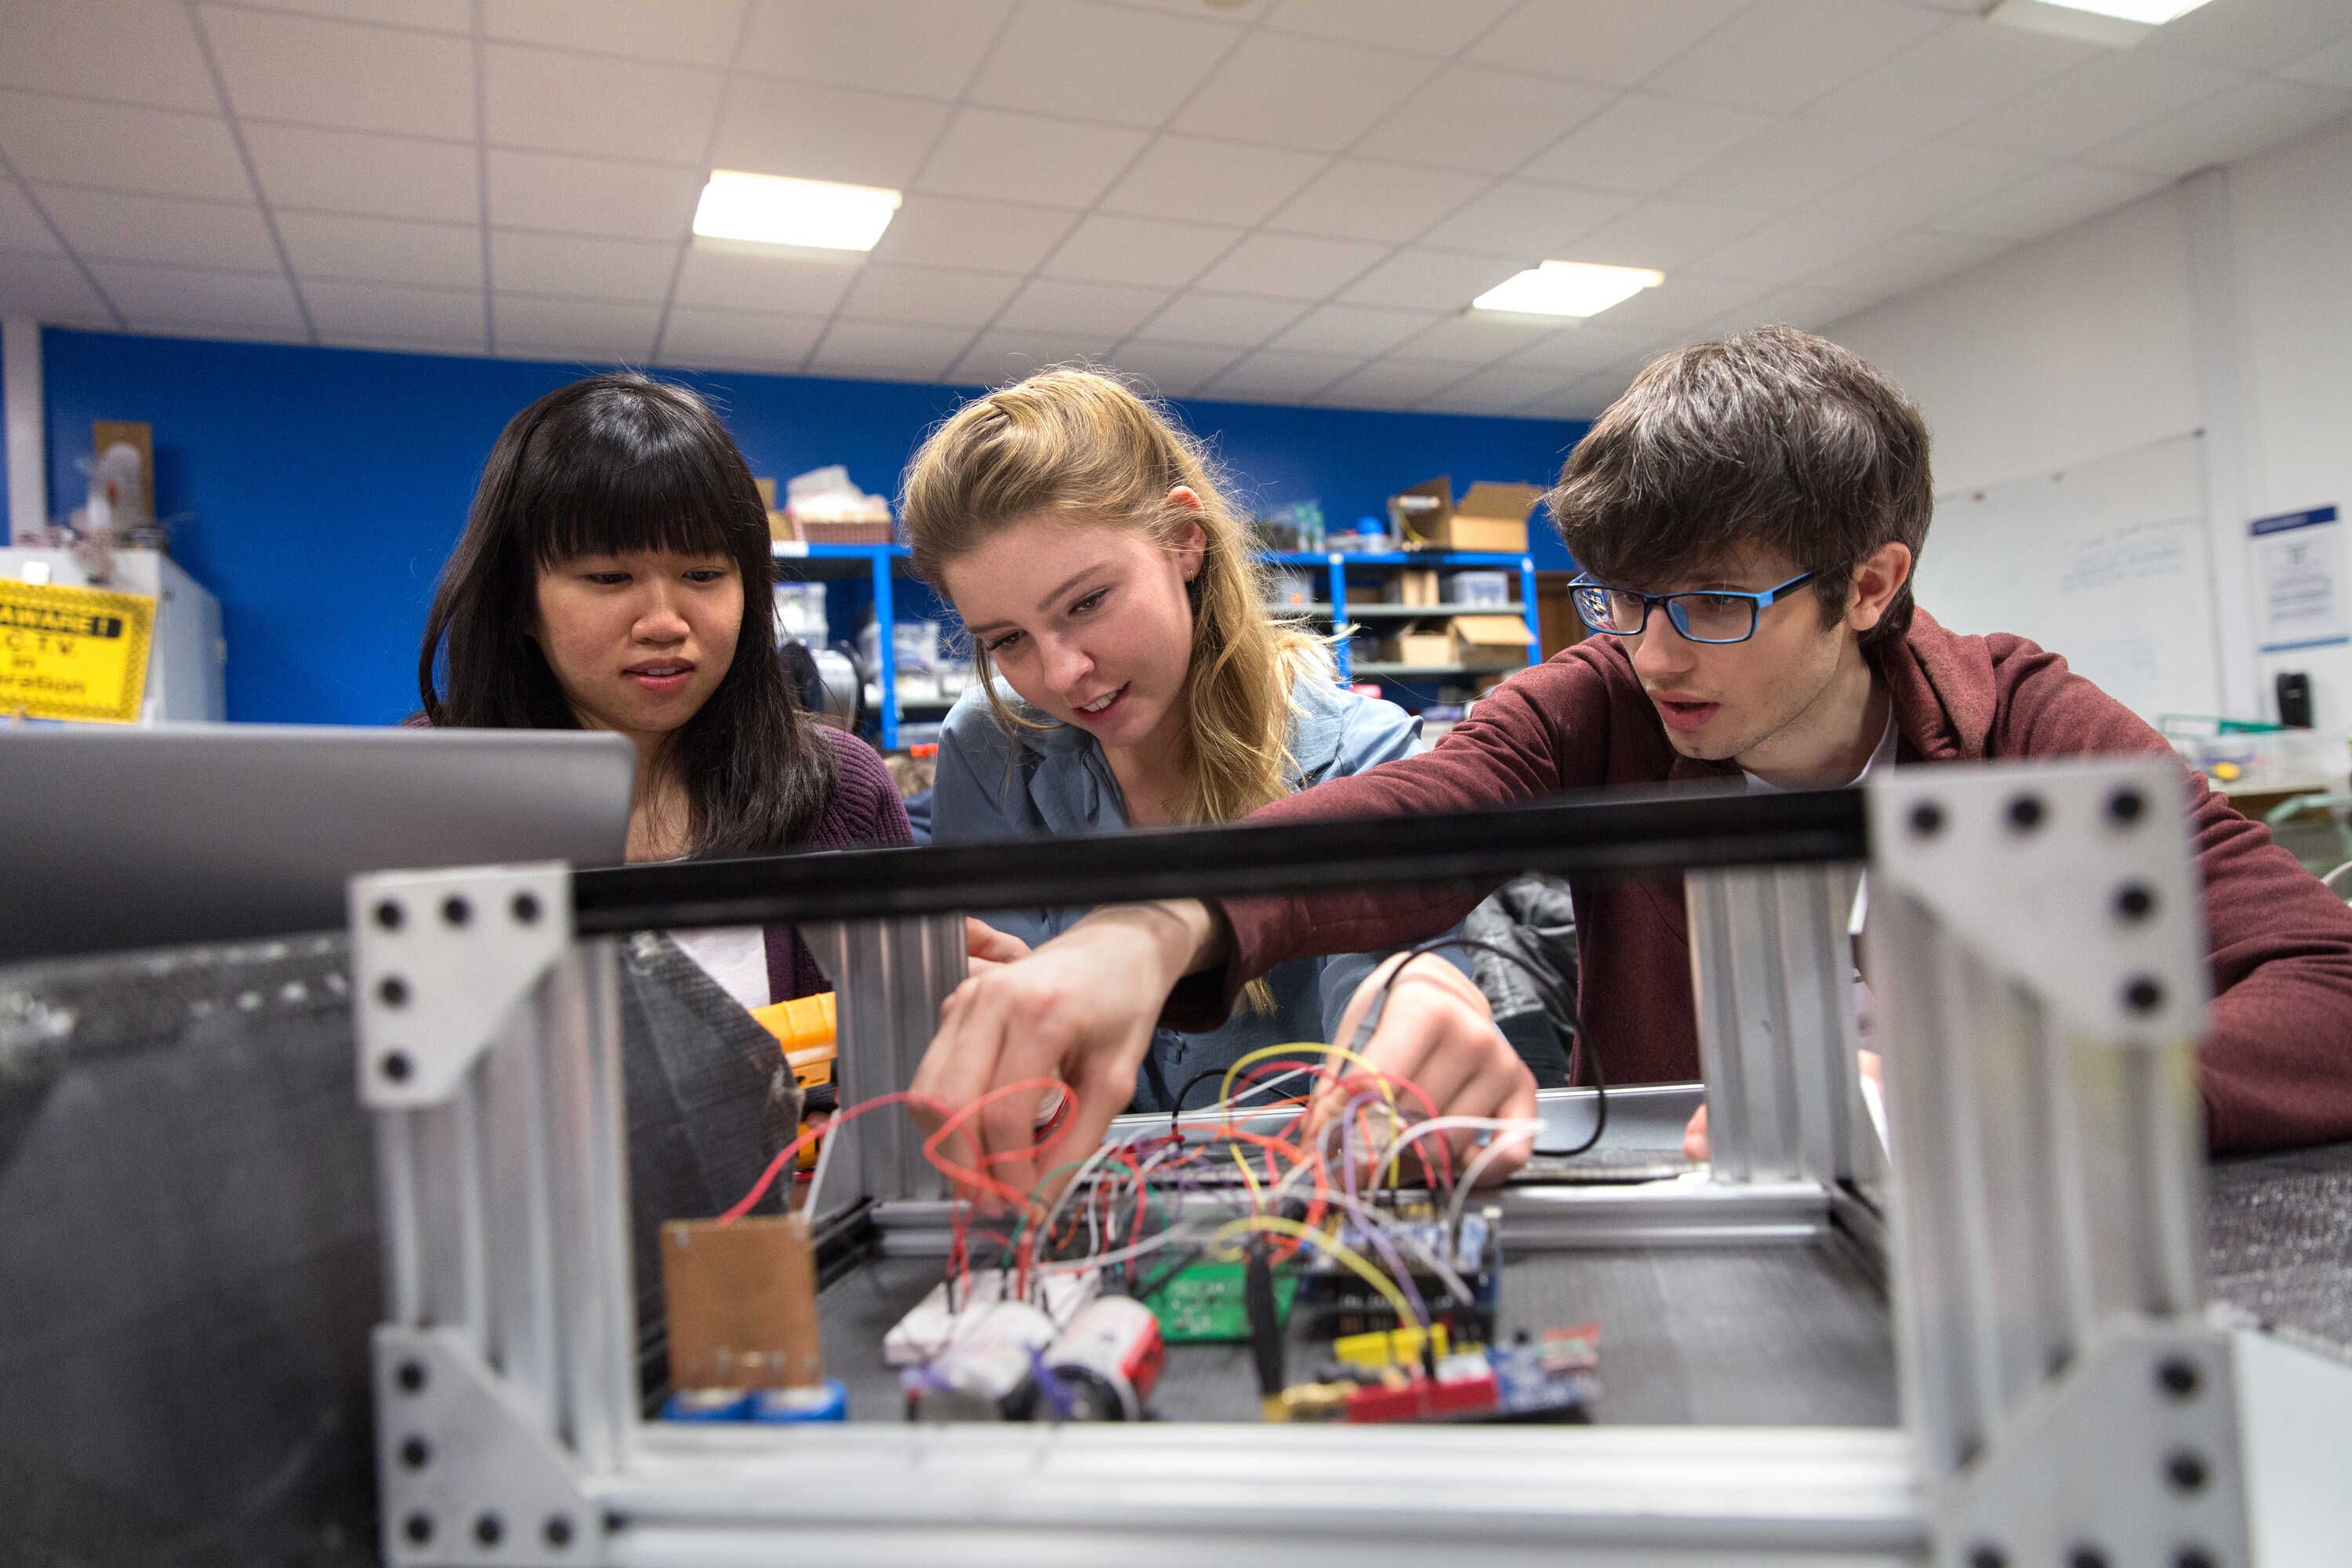 Three EEE students working on electronics